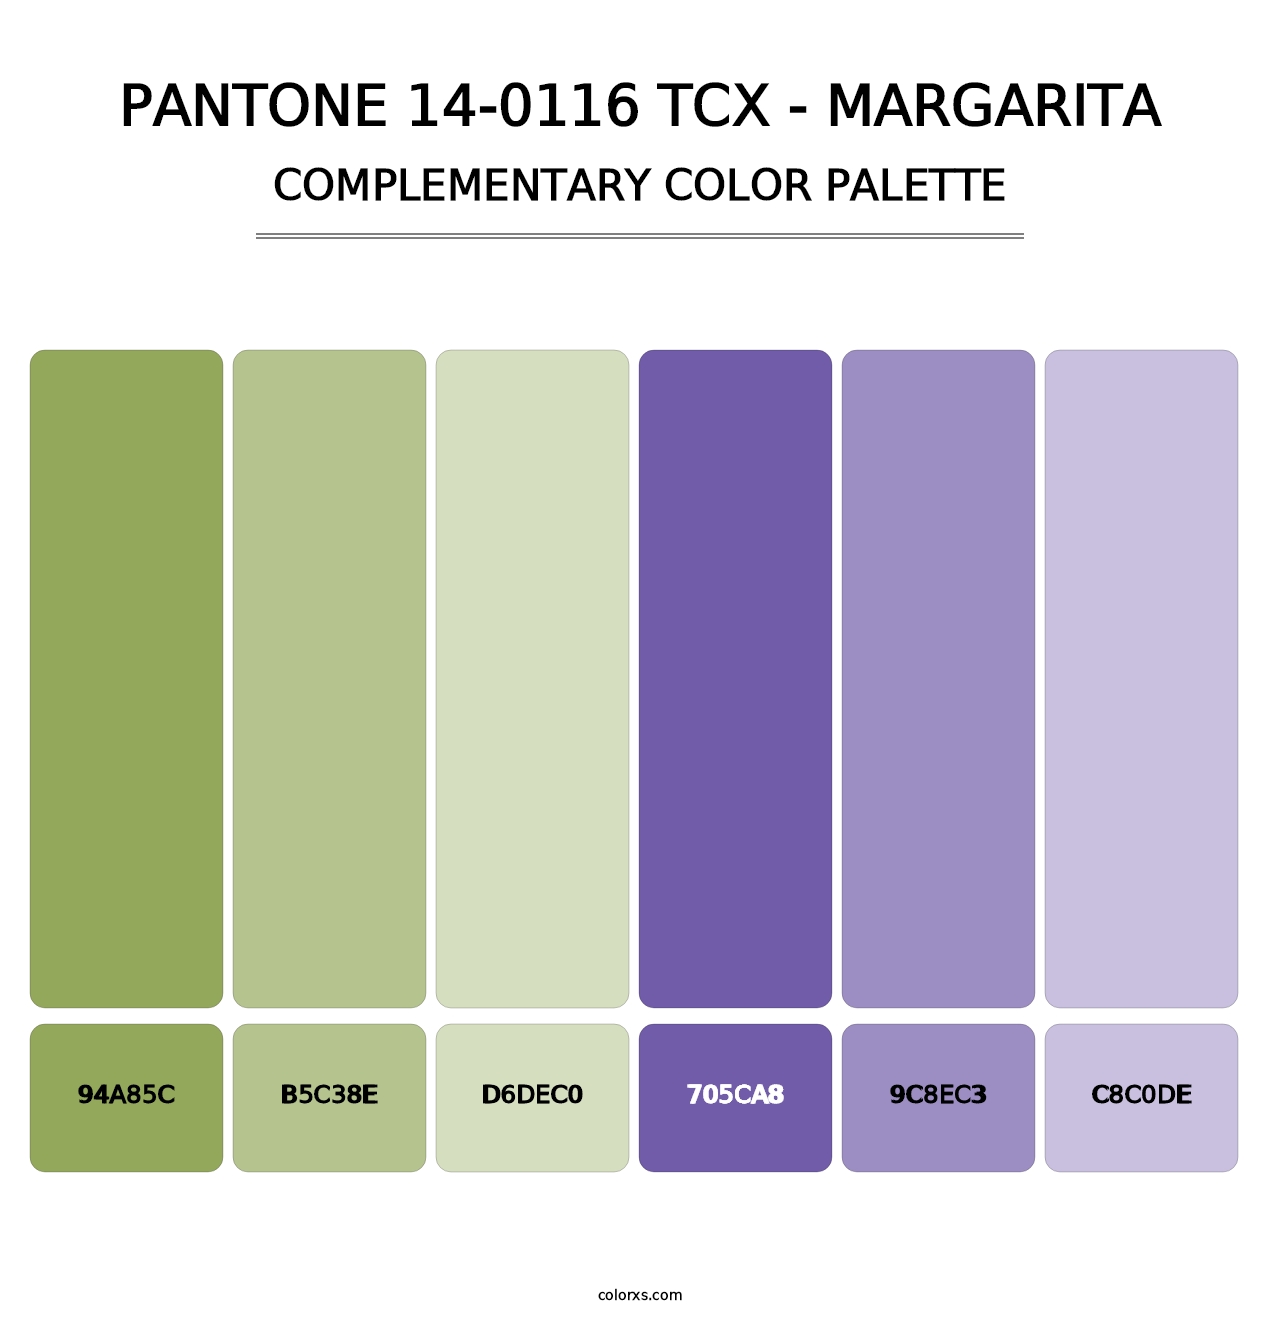 PANTONE 14-0116 TCX - Margarita - Complementary Color Palette